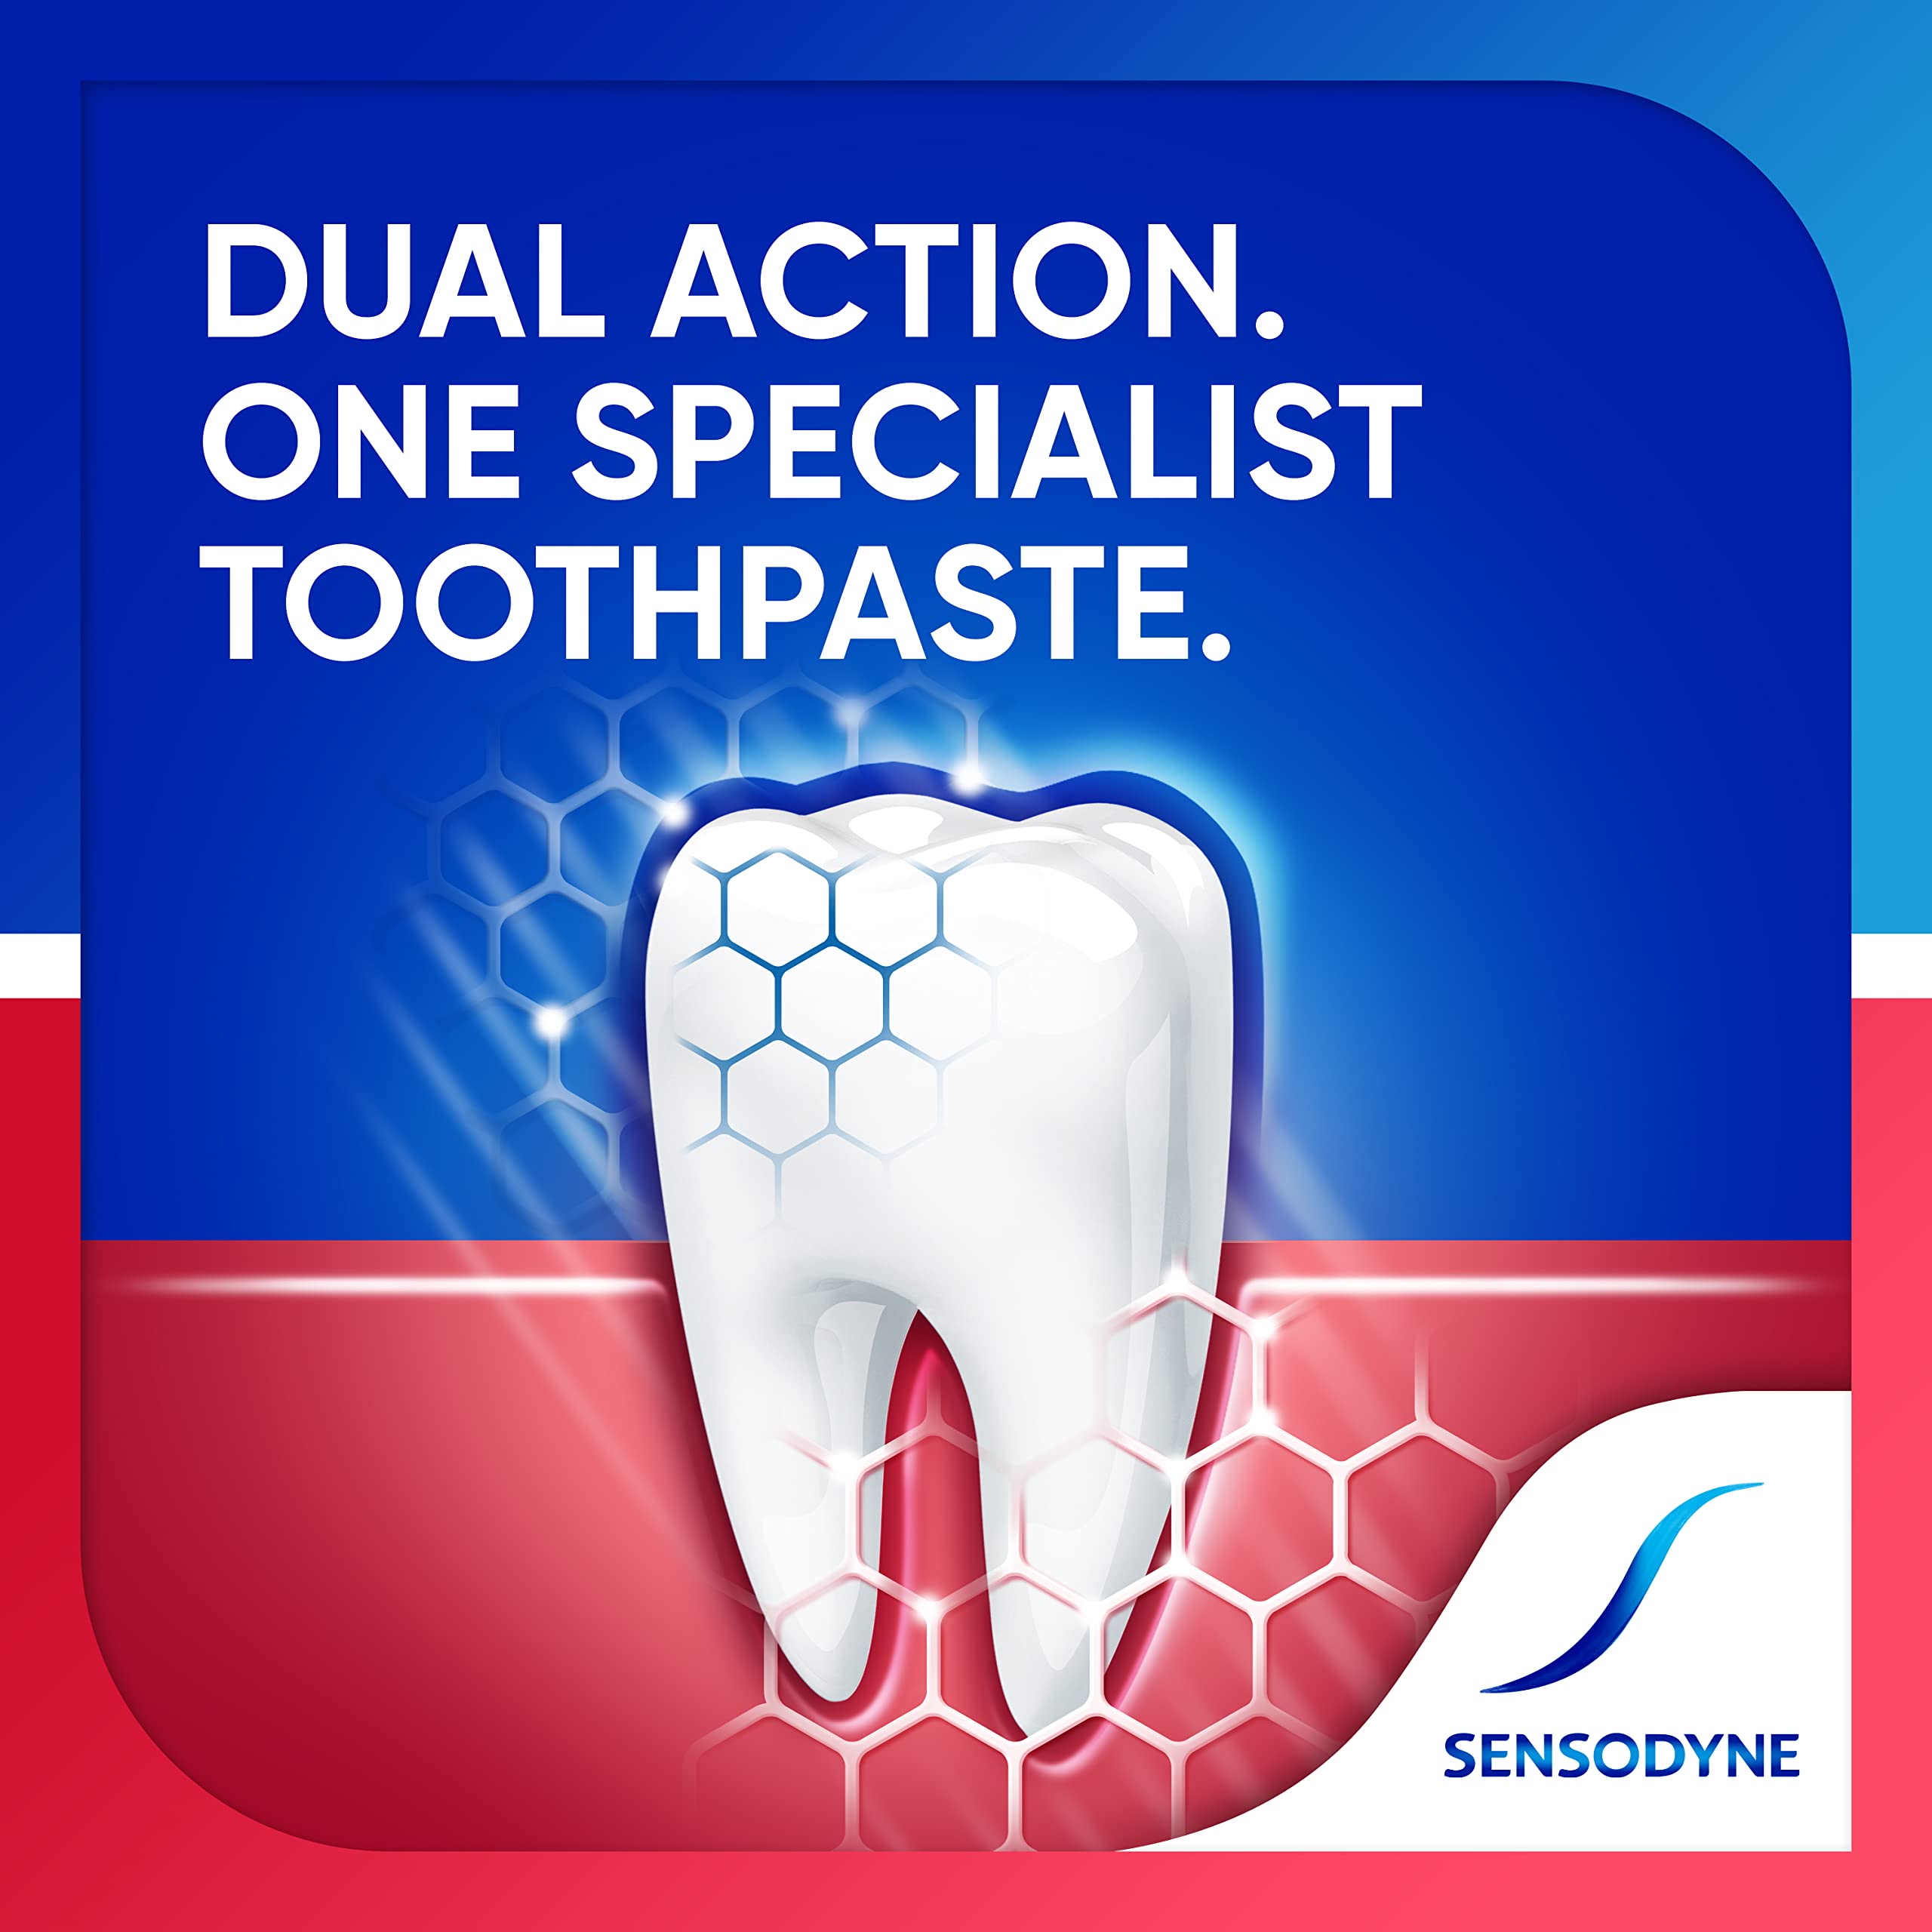 Sensodyne Sensitivity & Gum Sensitive Toothpaste for Gingivitis, Sensitive Teeth Treatment, Clean & Fresh - 3.4 oz (Pack of 4)